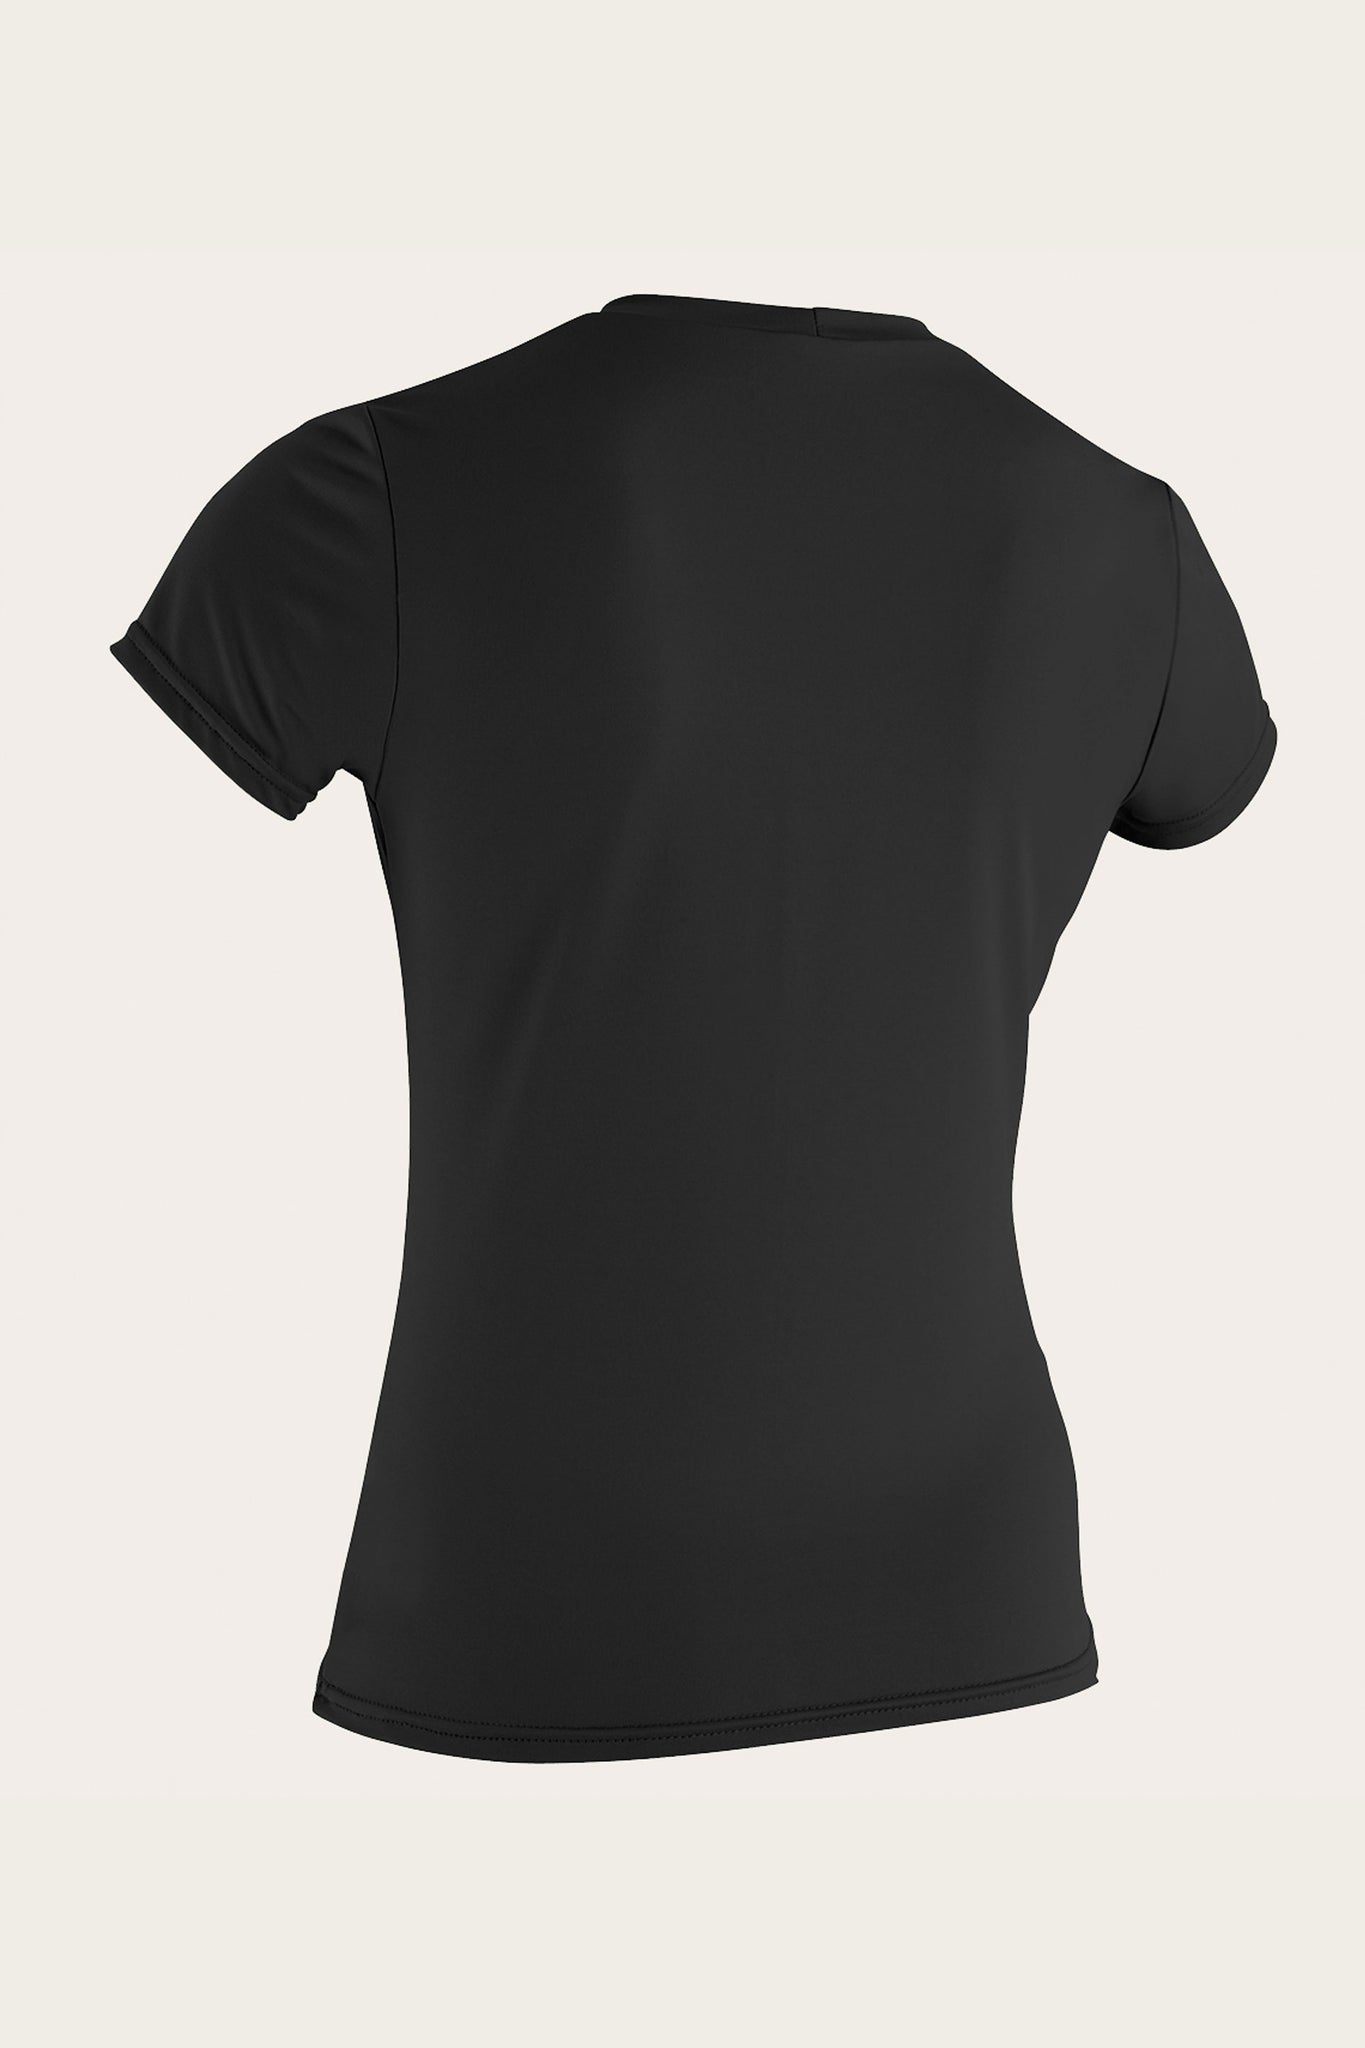 Women's Basic S/S Sun Shirt - Black | O'Neill